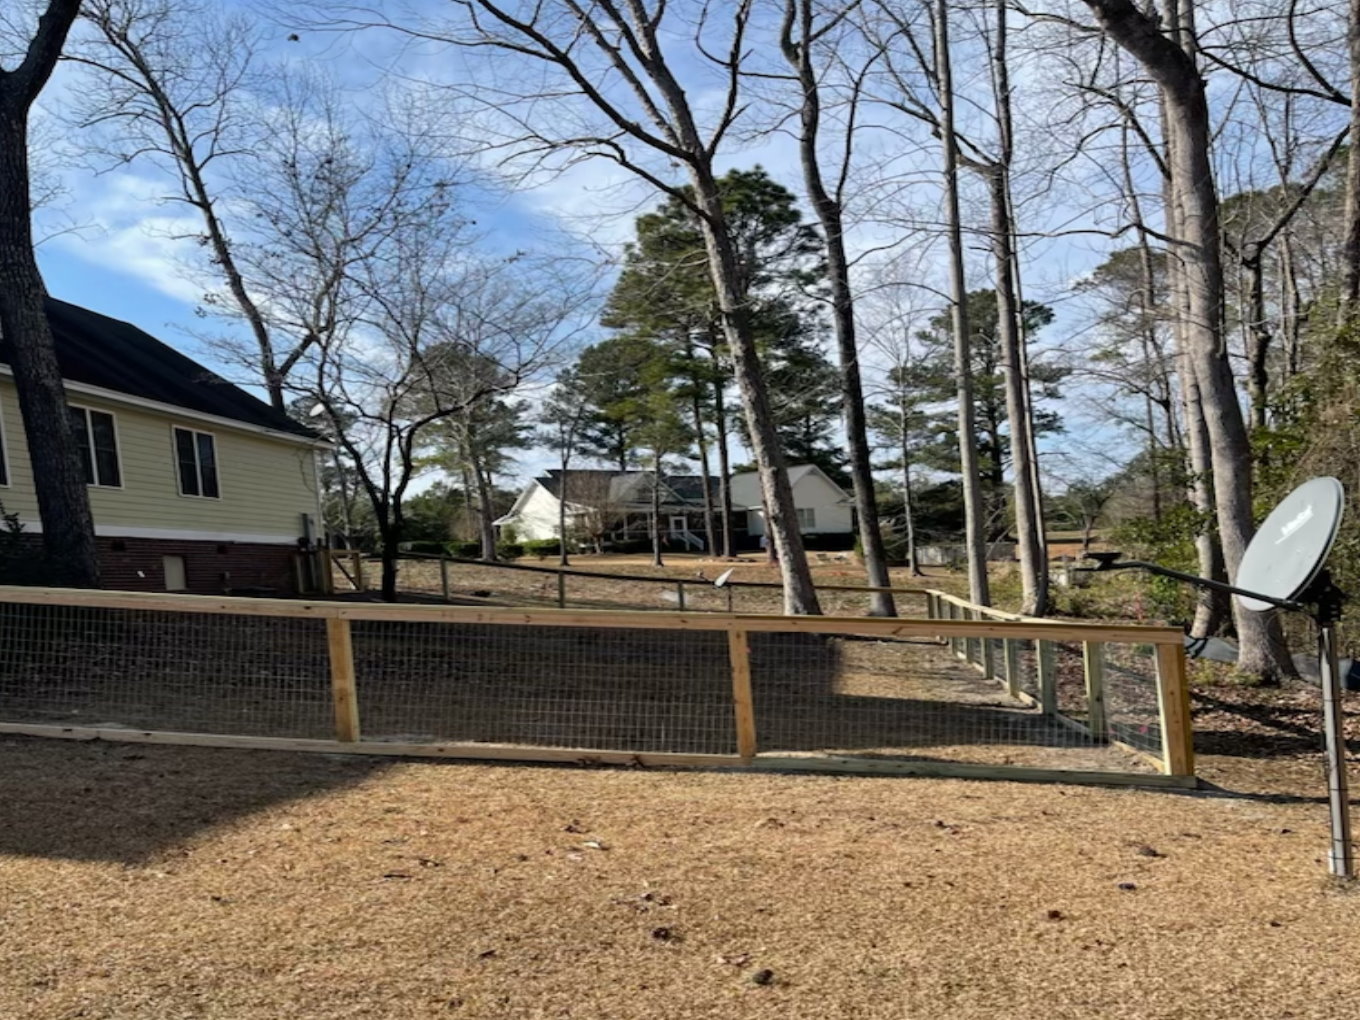 Reevesville South Carolina Fence Project Photo